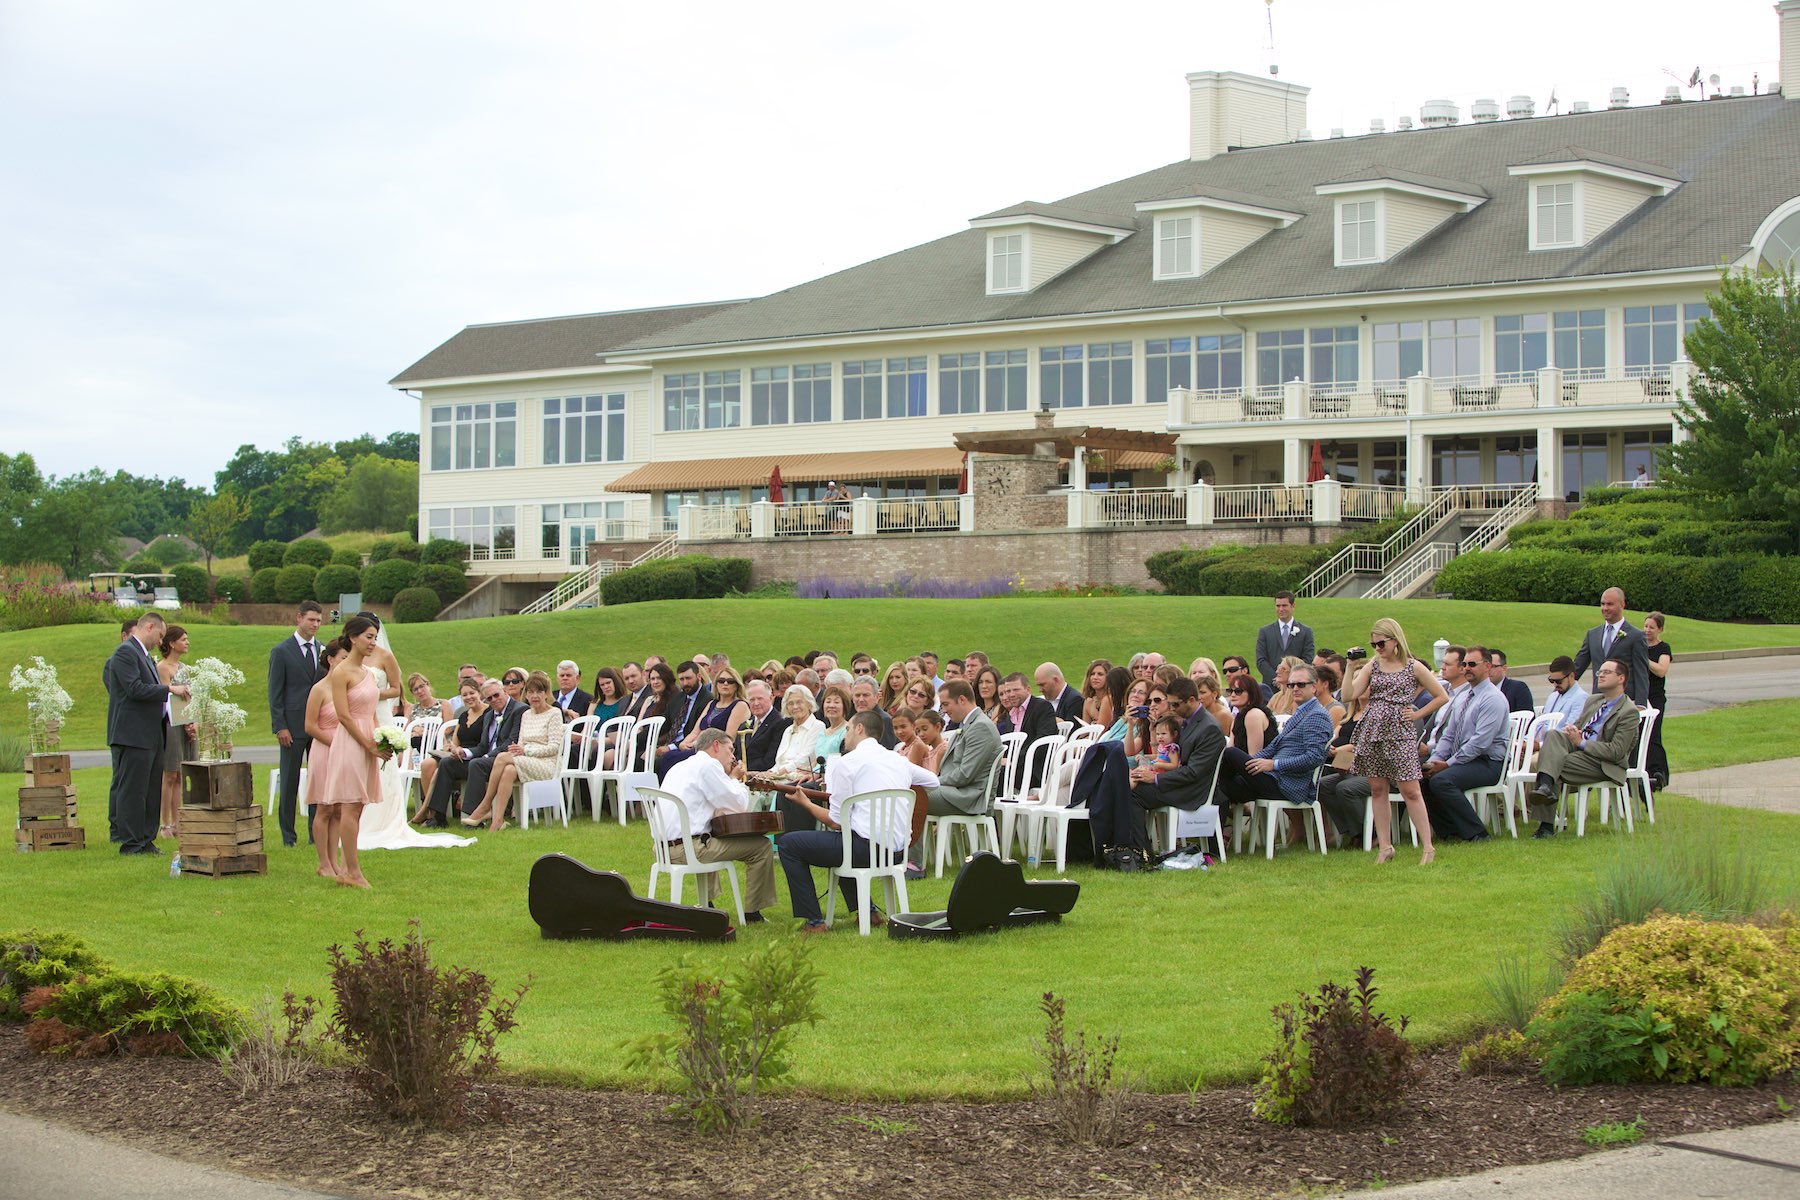 Scene setter, Emi & Daniel's wedding ceremony at Geneva National Golf Club in Lake Geneva, Wisconsin. Wedding photography by Steve & Tiffany Warmowski.